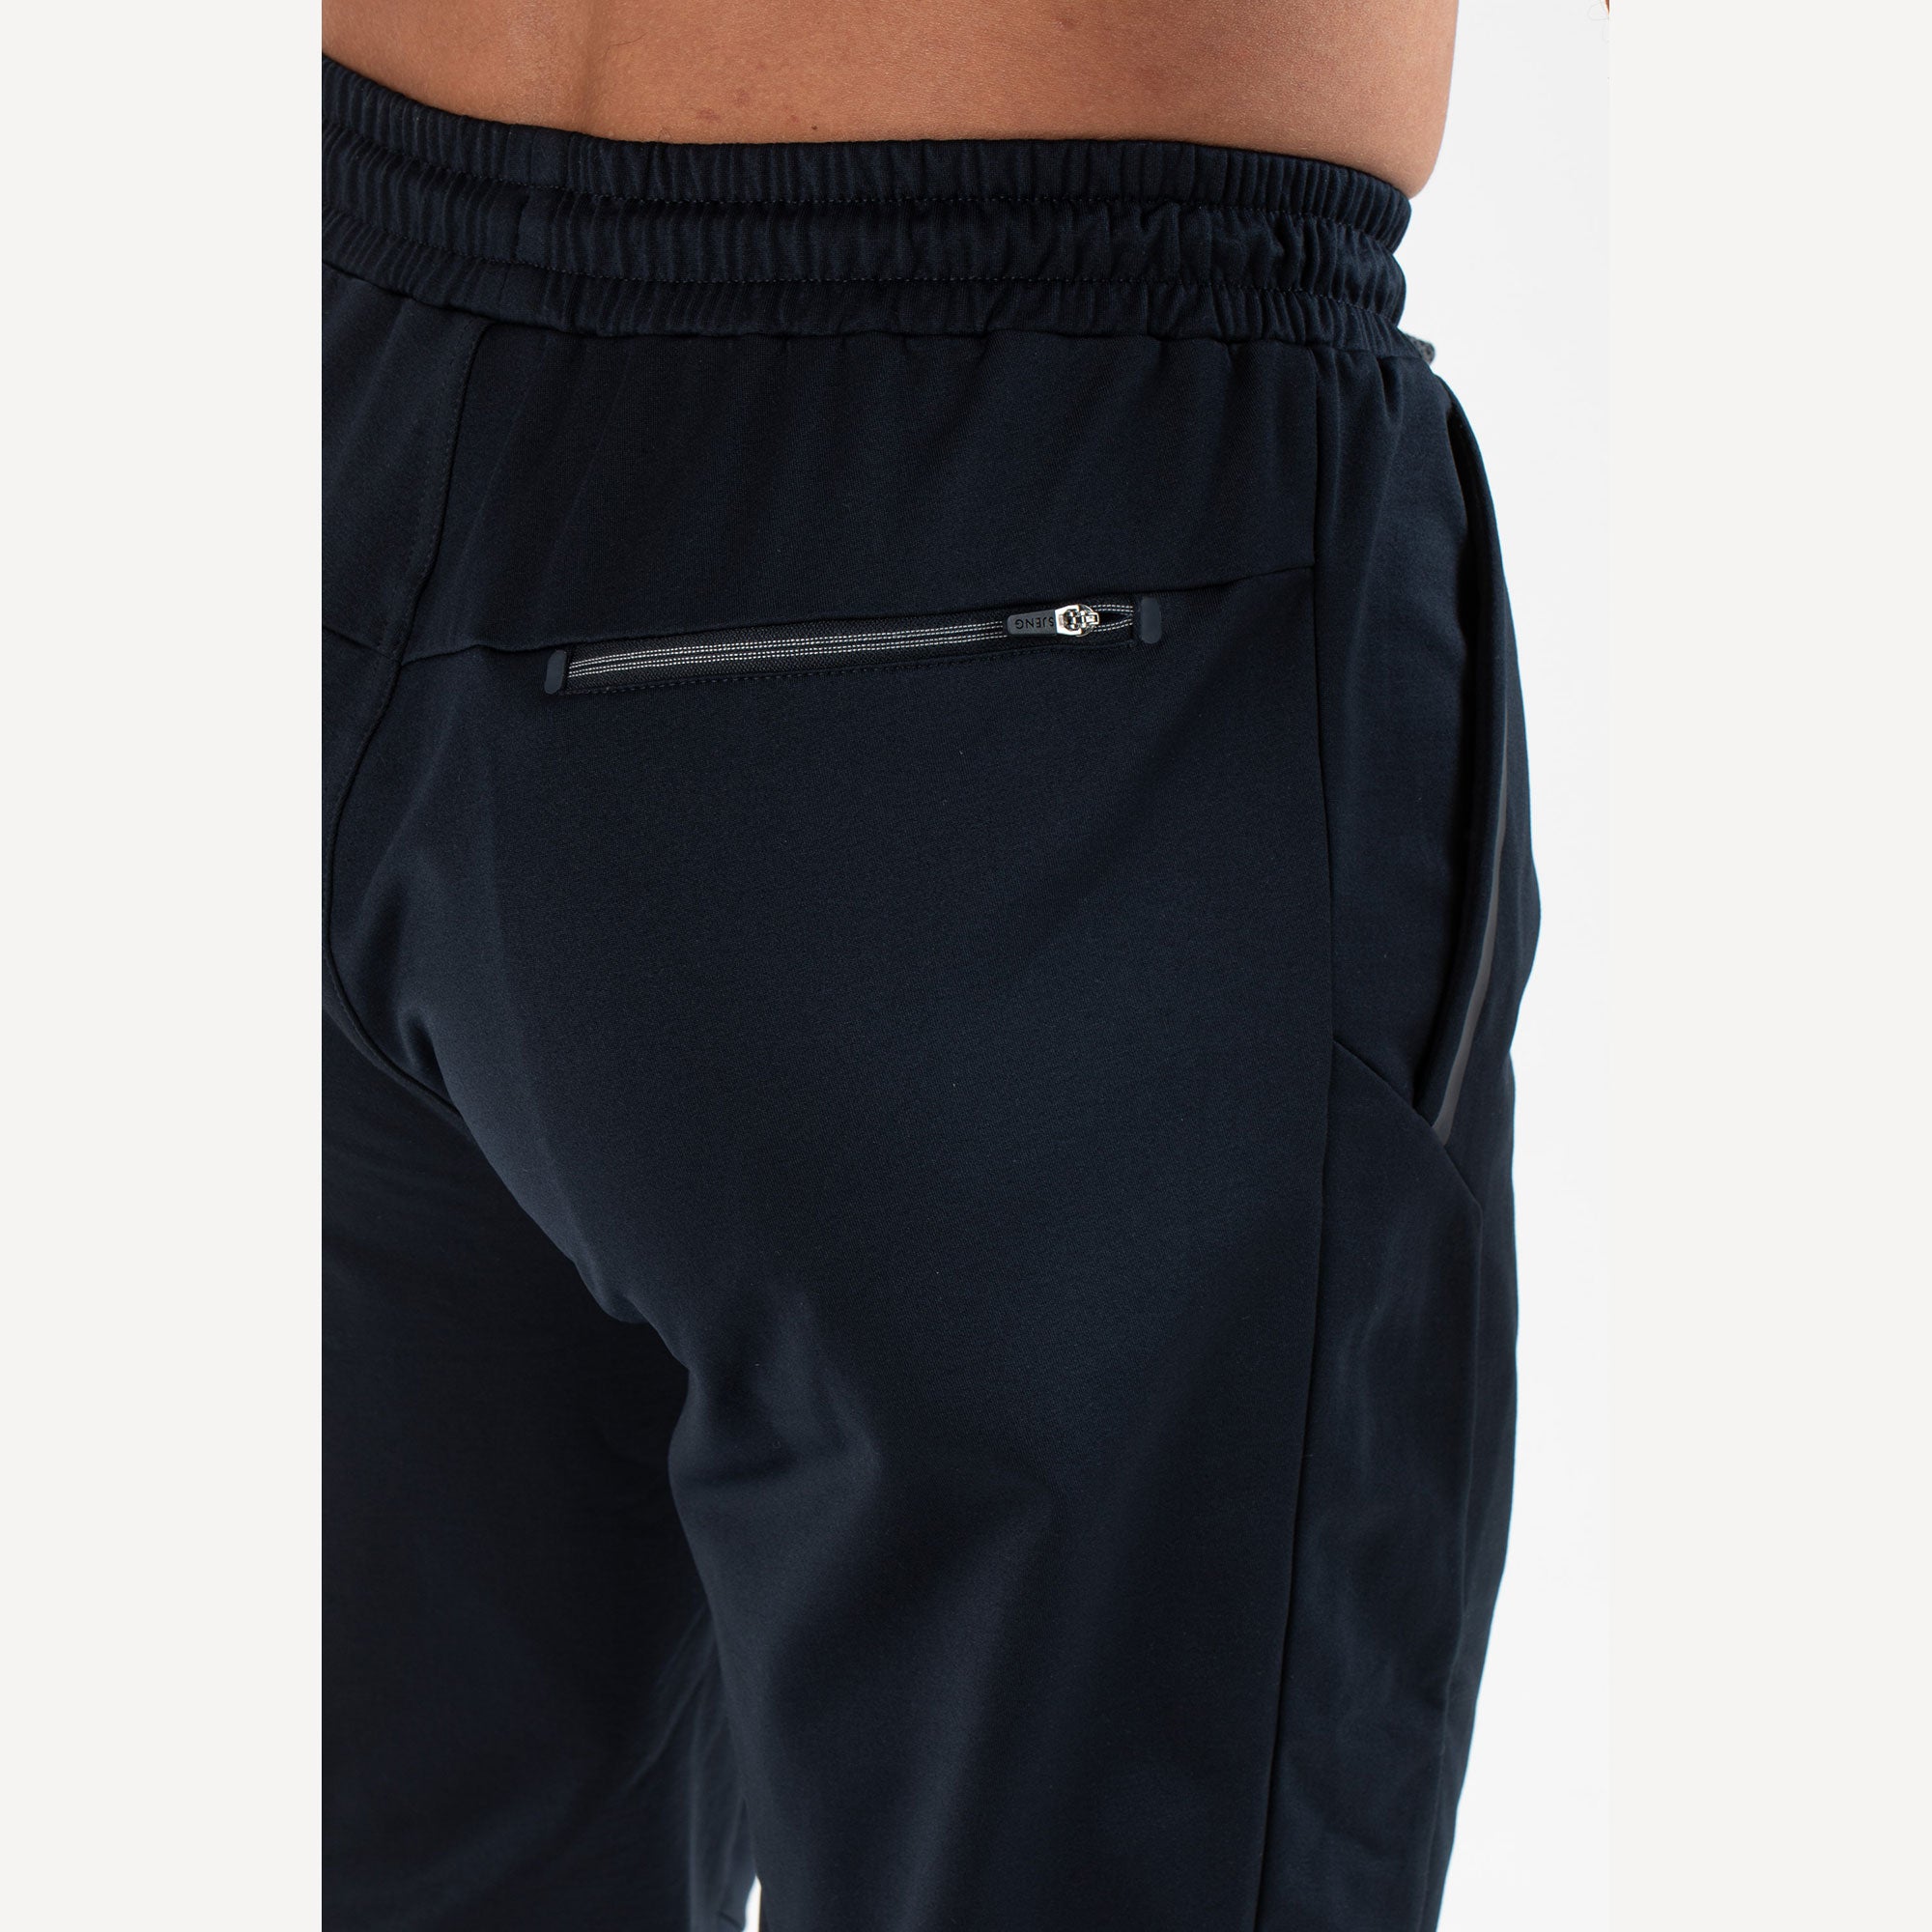 Sjeng Sports Pabel Long Men's Tennis Pants - Dark Blue